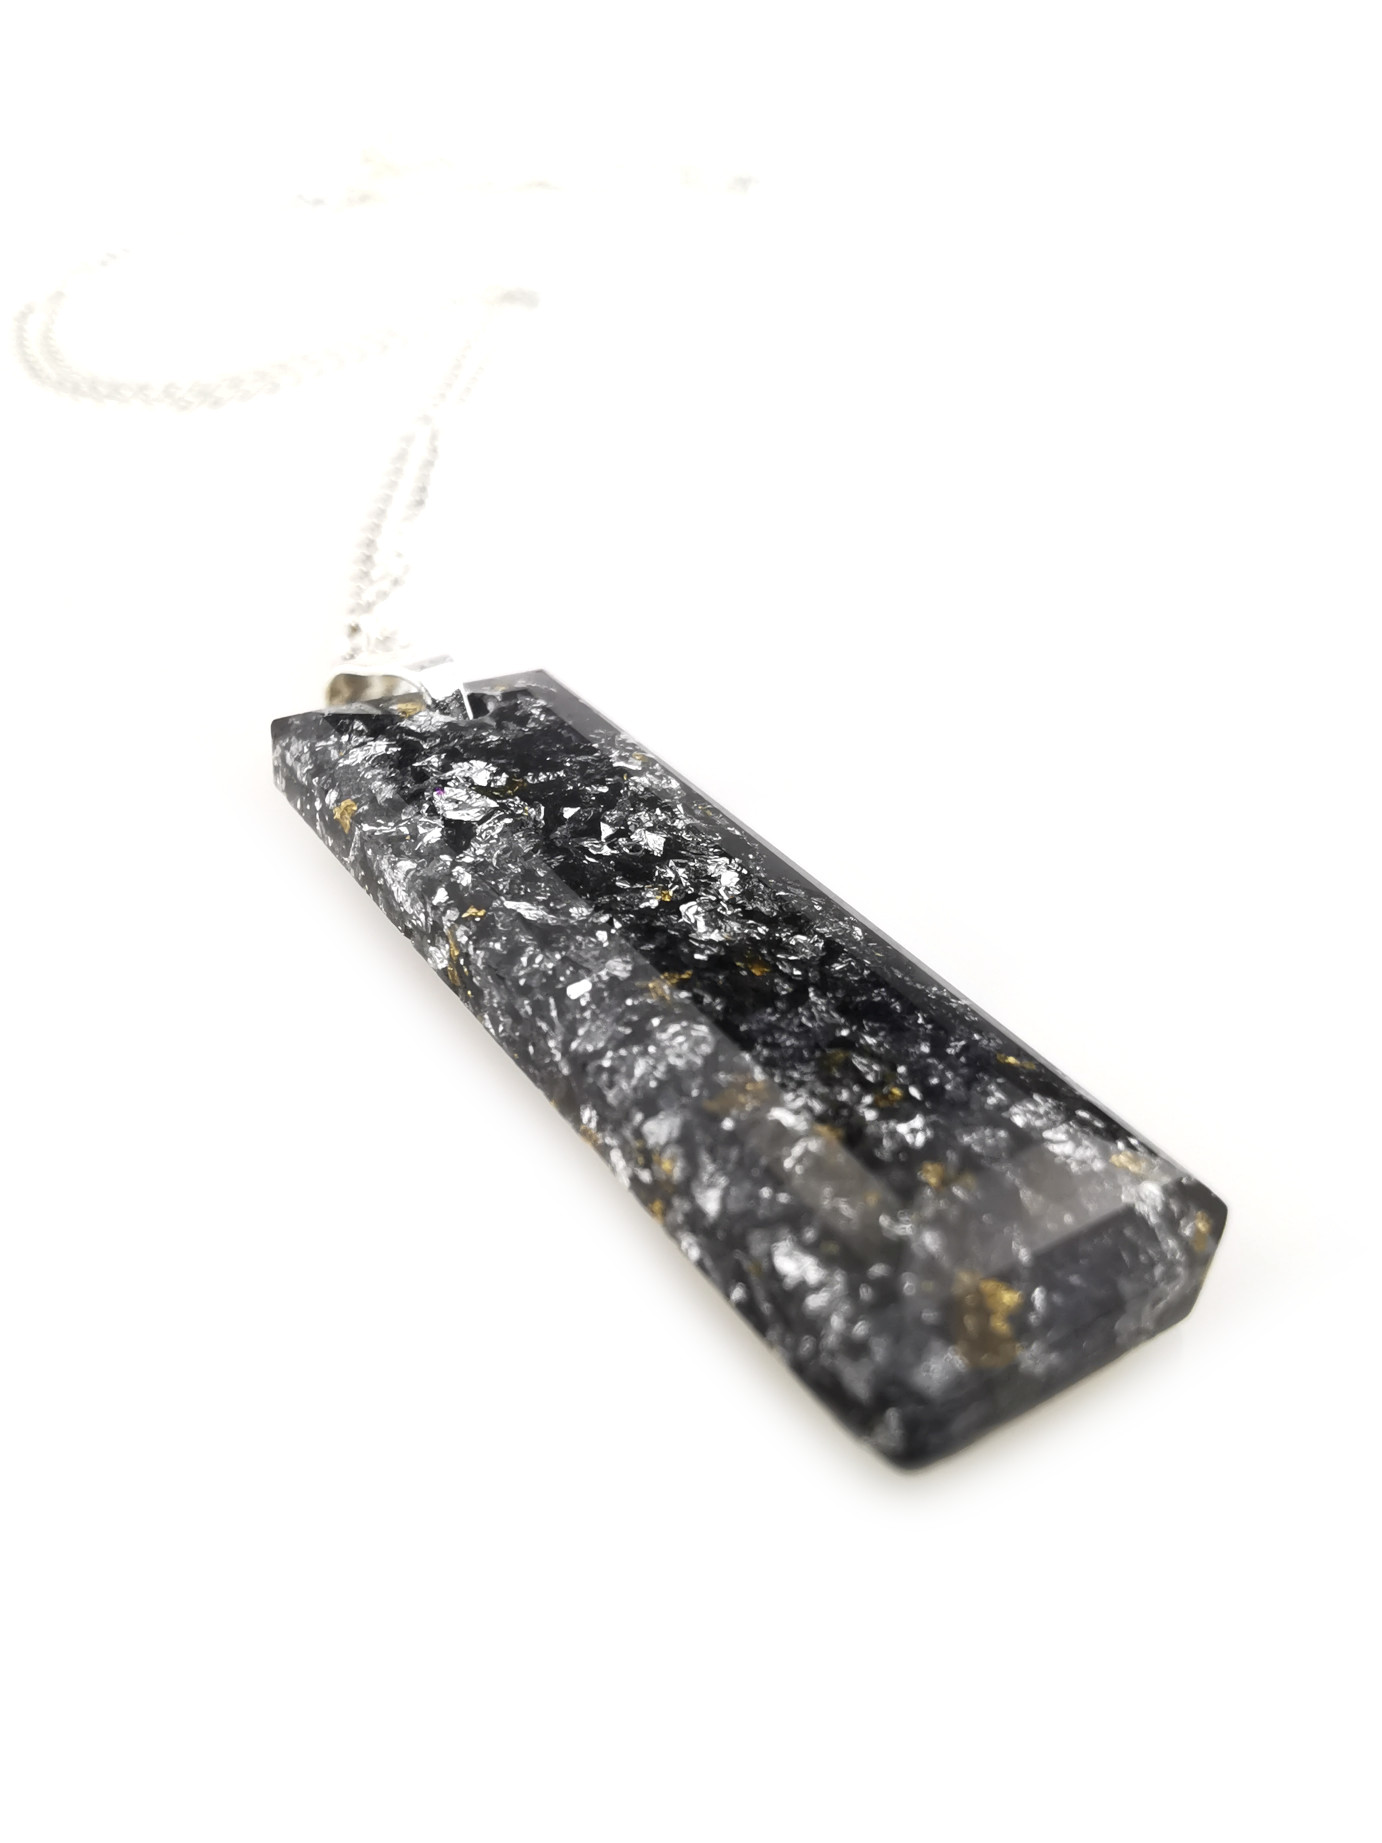 Black Baguette Orgone Crystal Pendant by OrgoneVibes